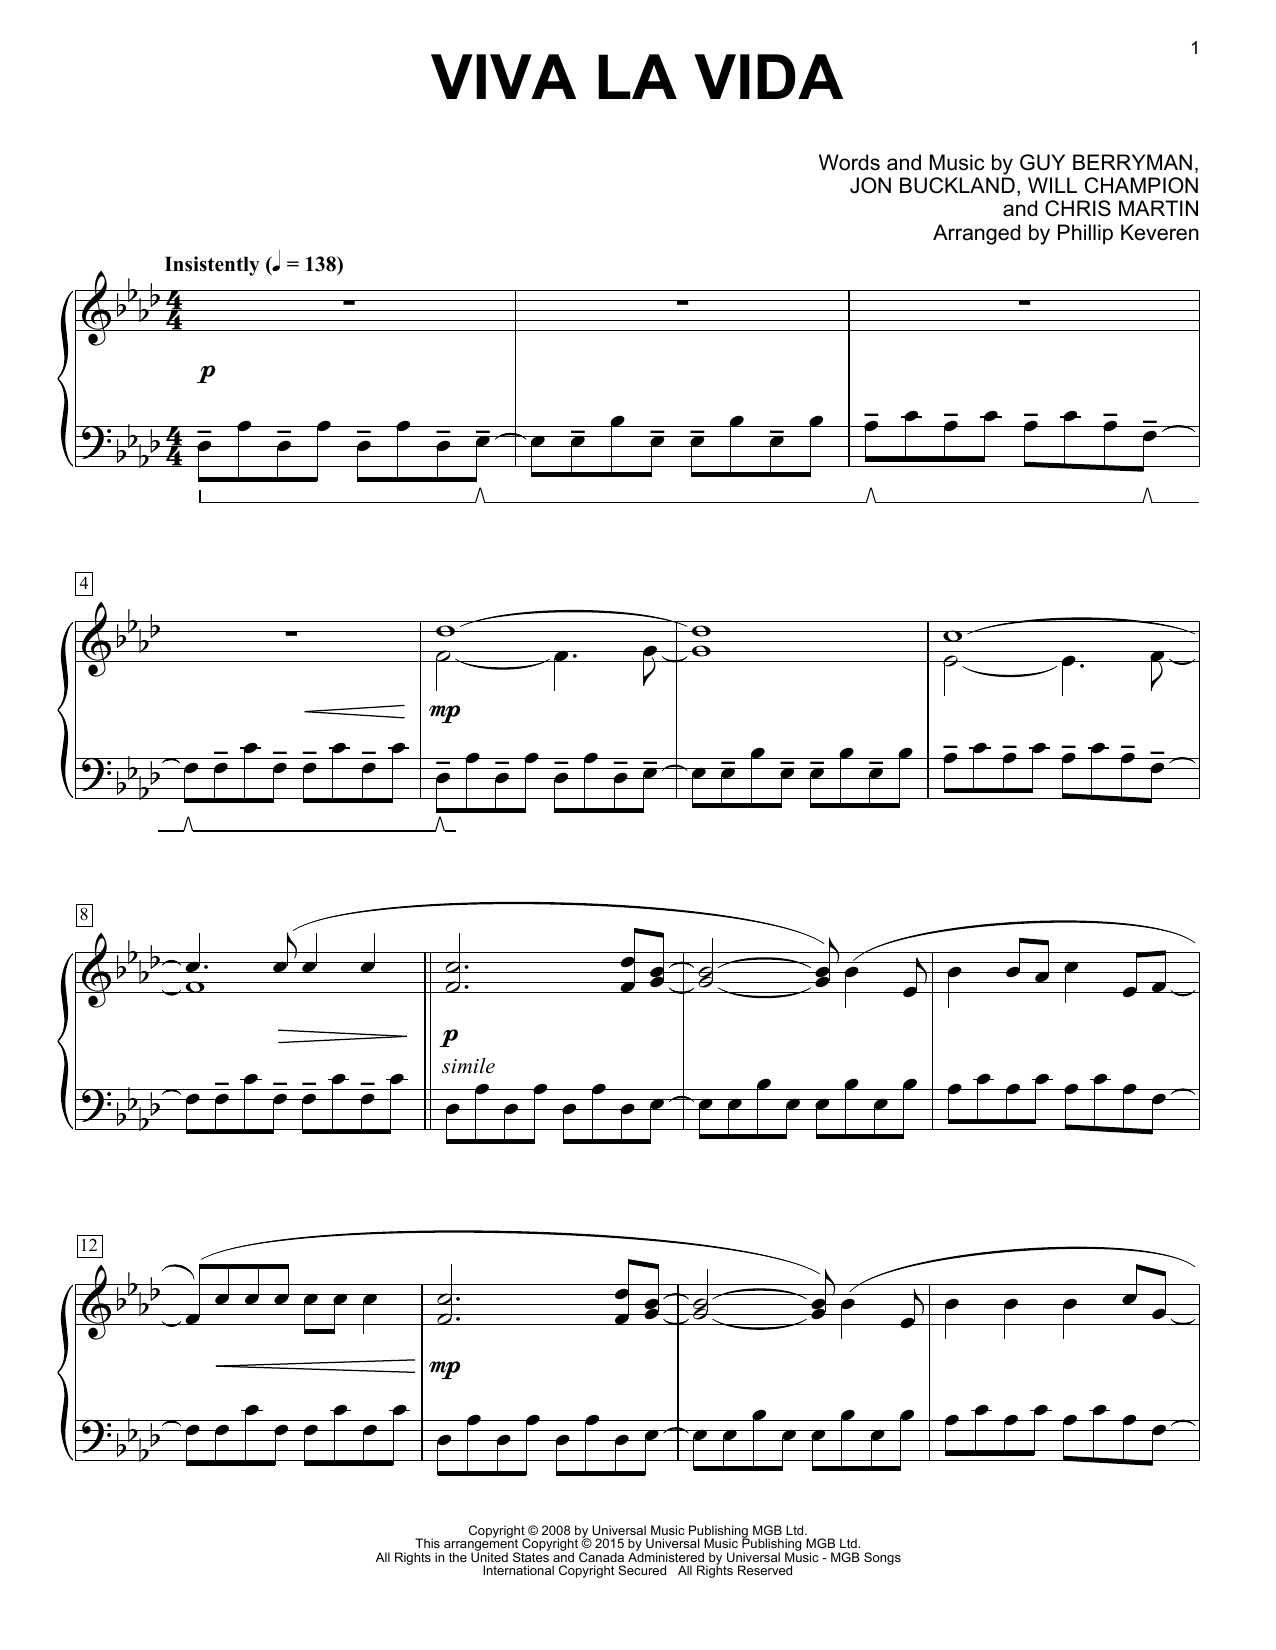 Coldplay Viva La Vida [Classical version] (arr. Phillip Keveren) Sheet Music Notes & Chords for Piano - Download or Print PDF